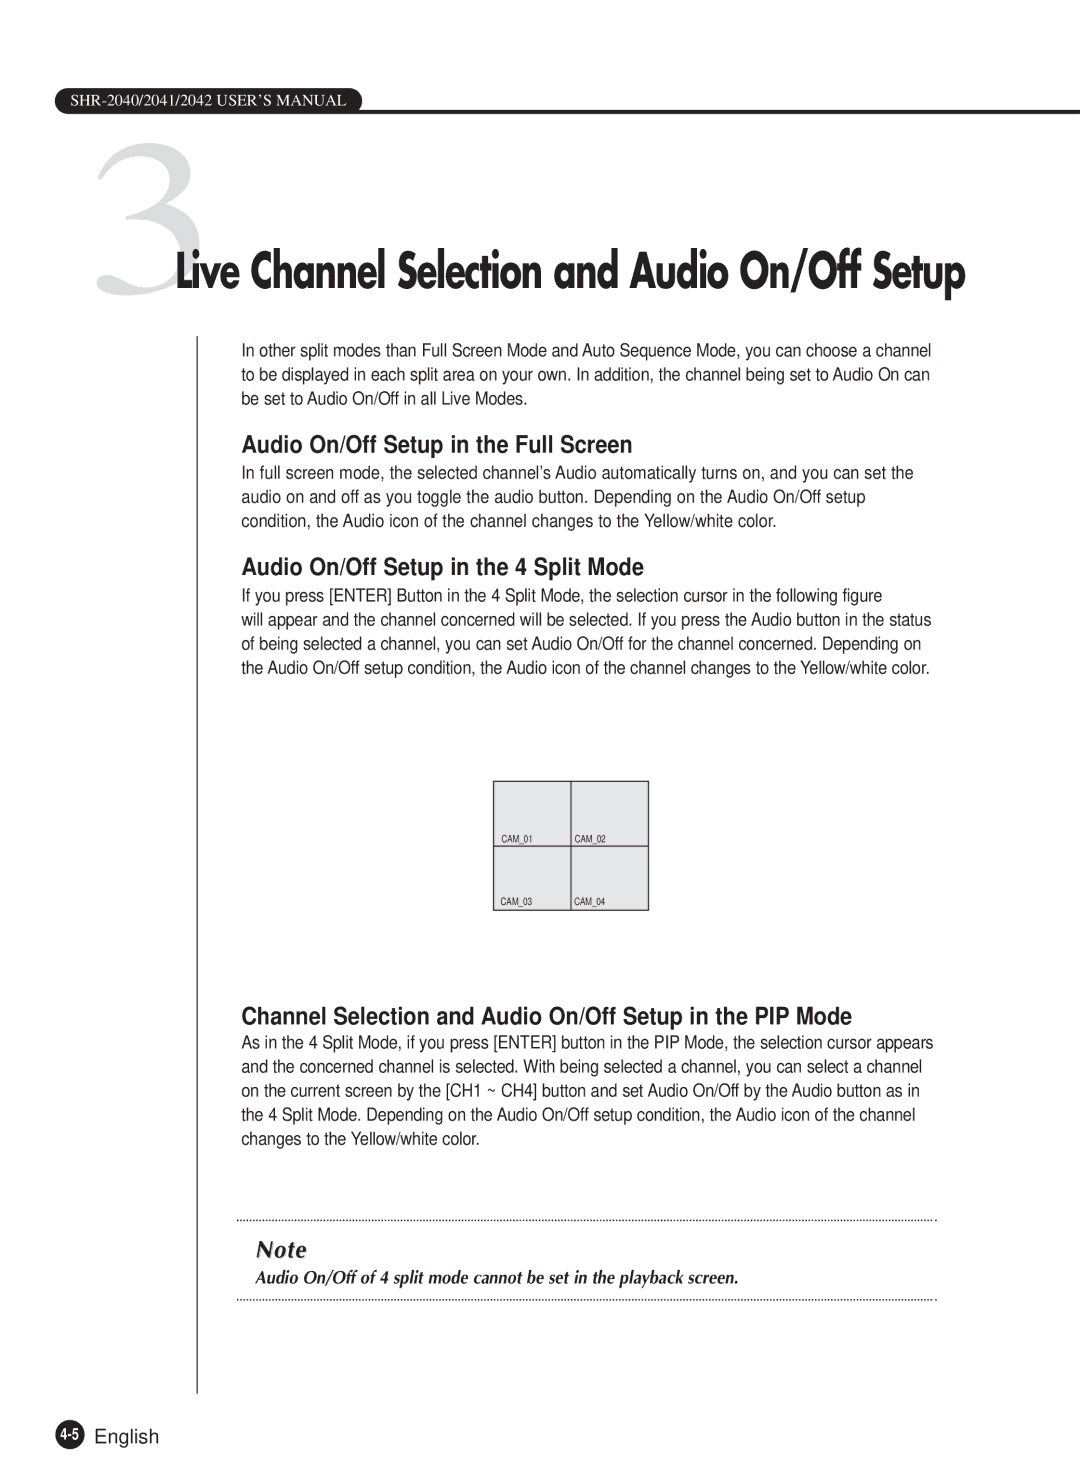 Samsung SHR-2040N, SHR-2040P manual Audio On/Off Setup in the Full Screen, Audio On/Off Setup in the 4 Split Mode 